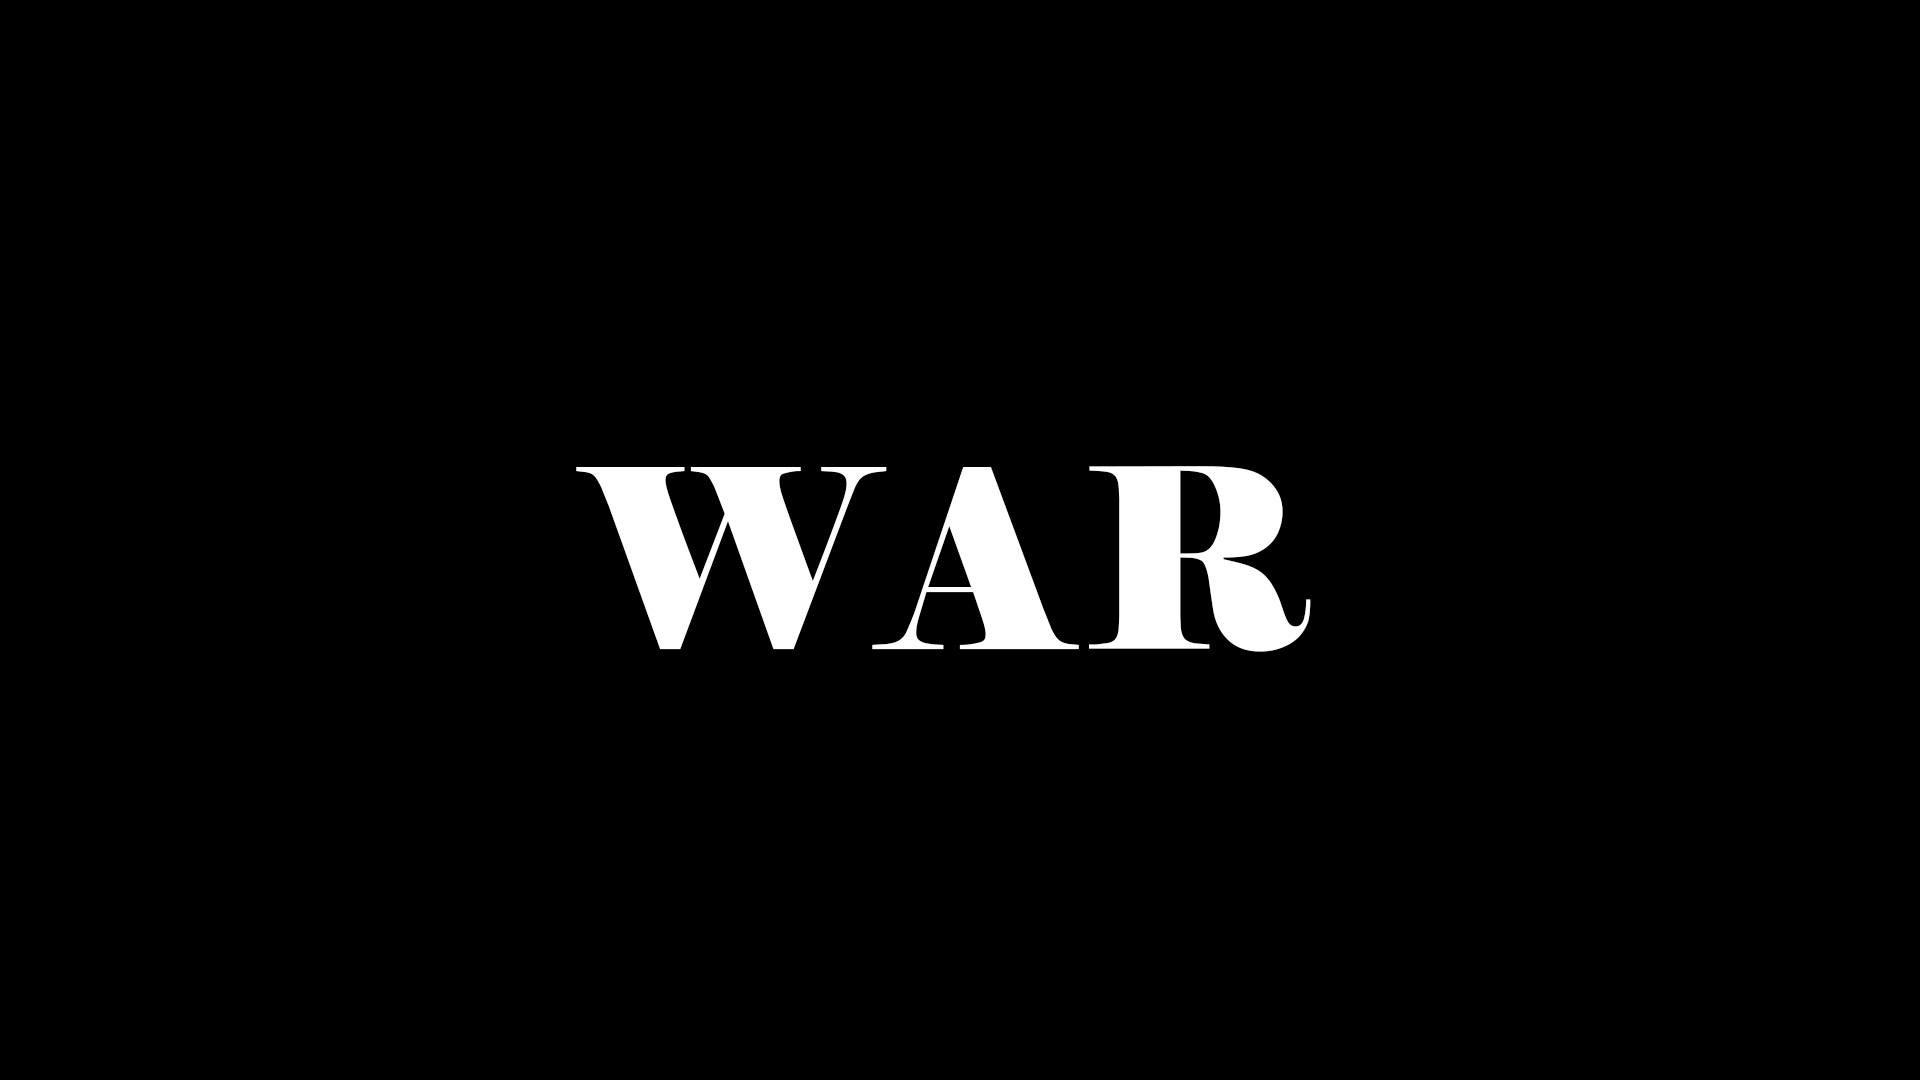 War - A short film by Braden Baumhower